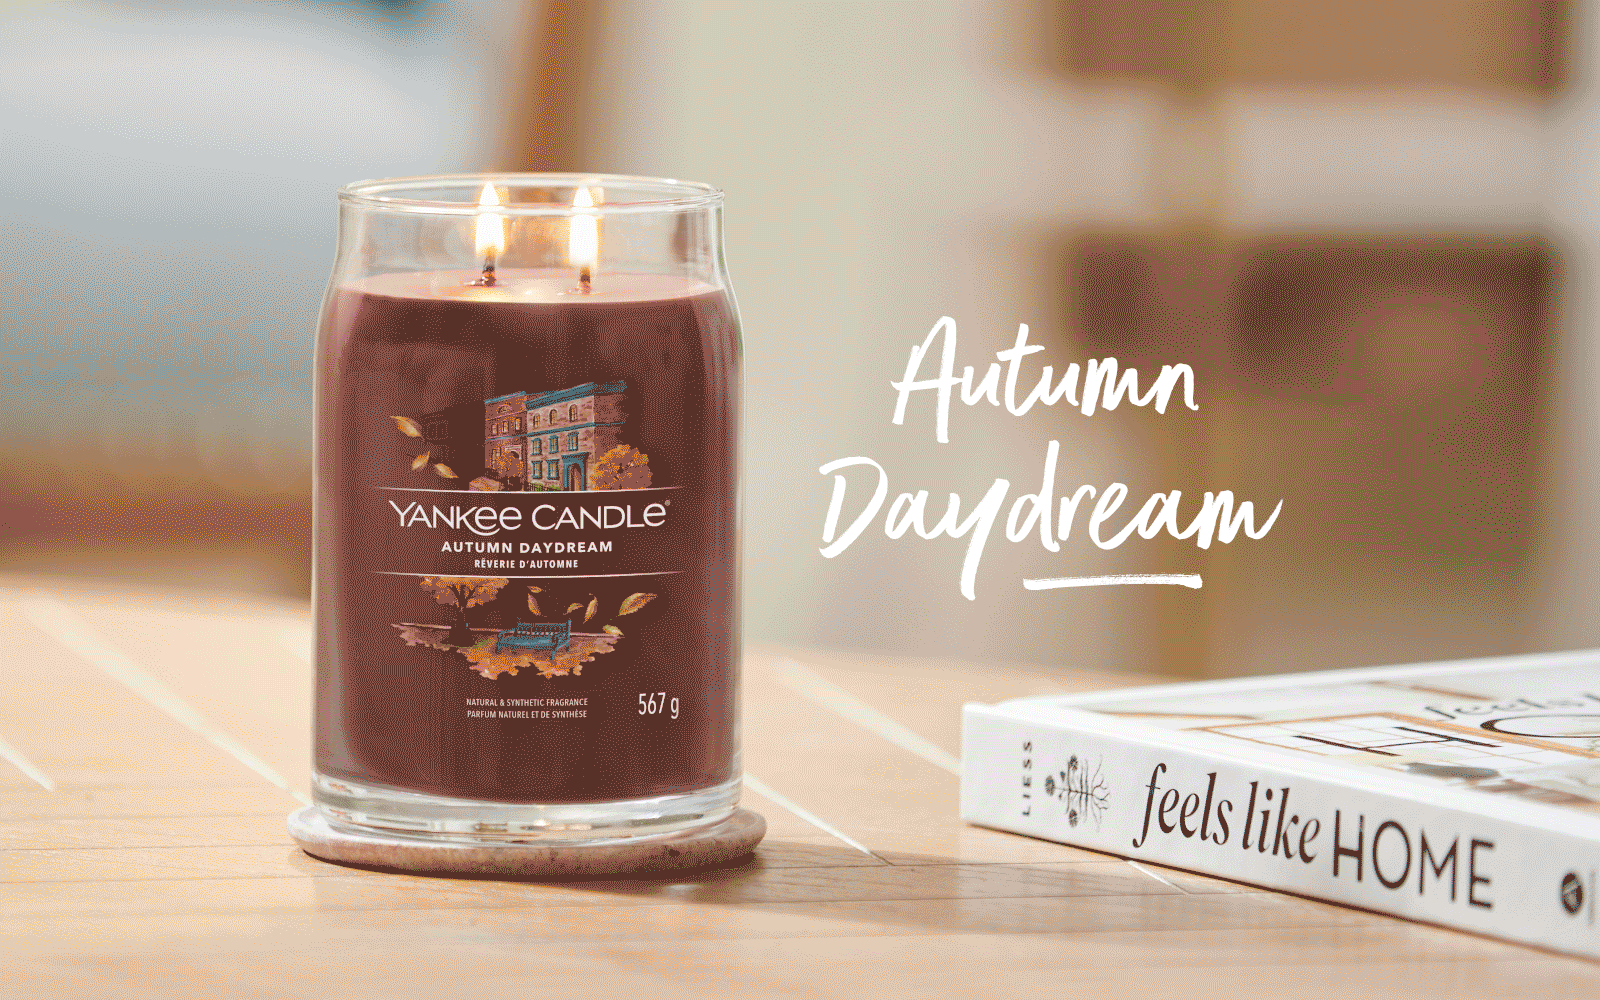 Collezione Daydreaming of Autumn, Candele autunnali